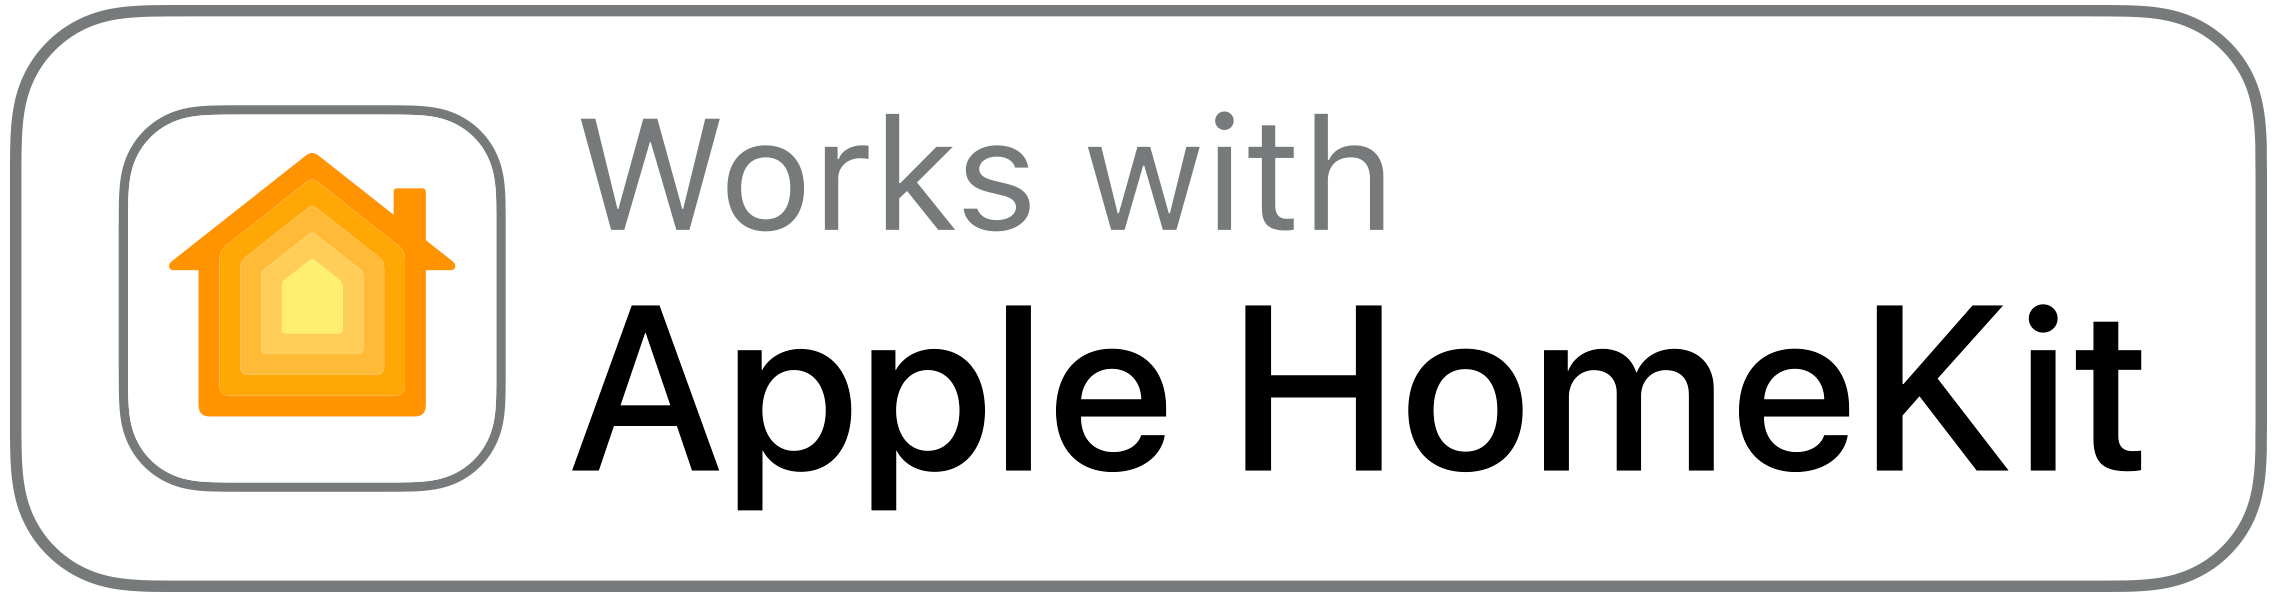 RainMachine Pro-8/16 works with Apple HomeKit